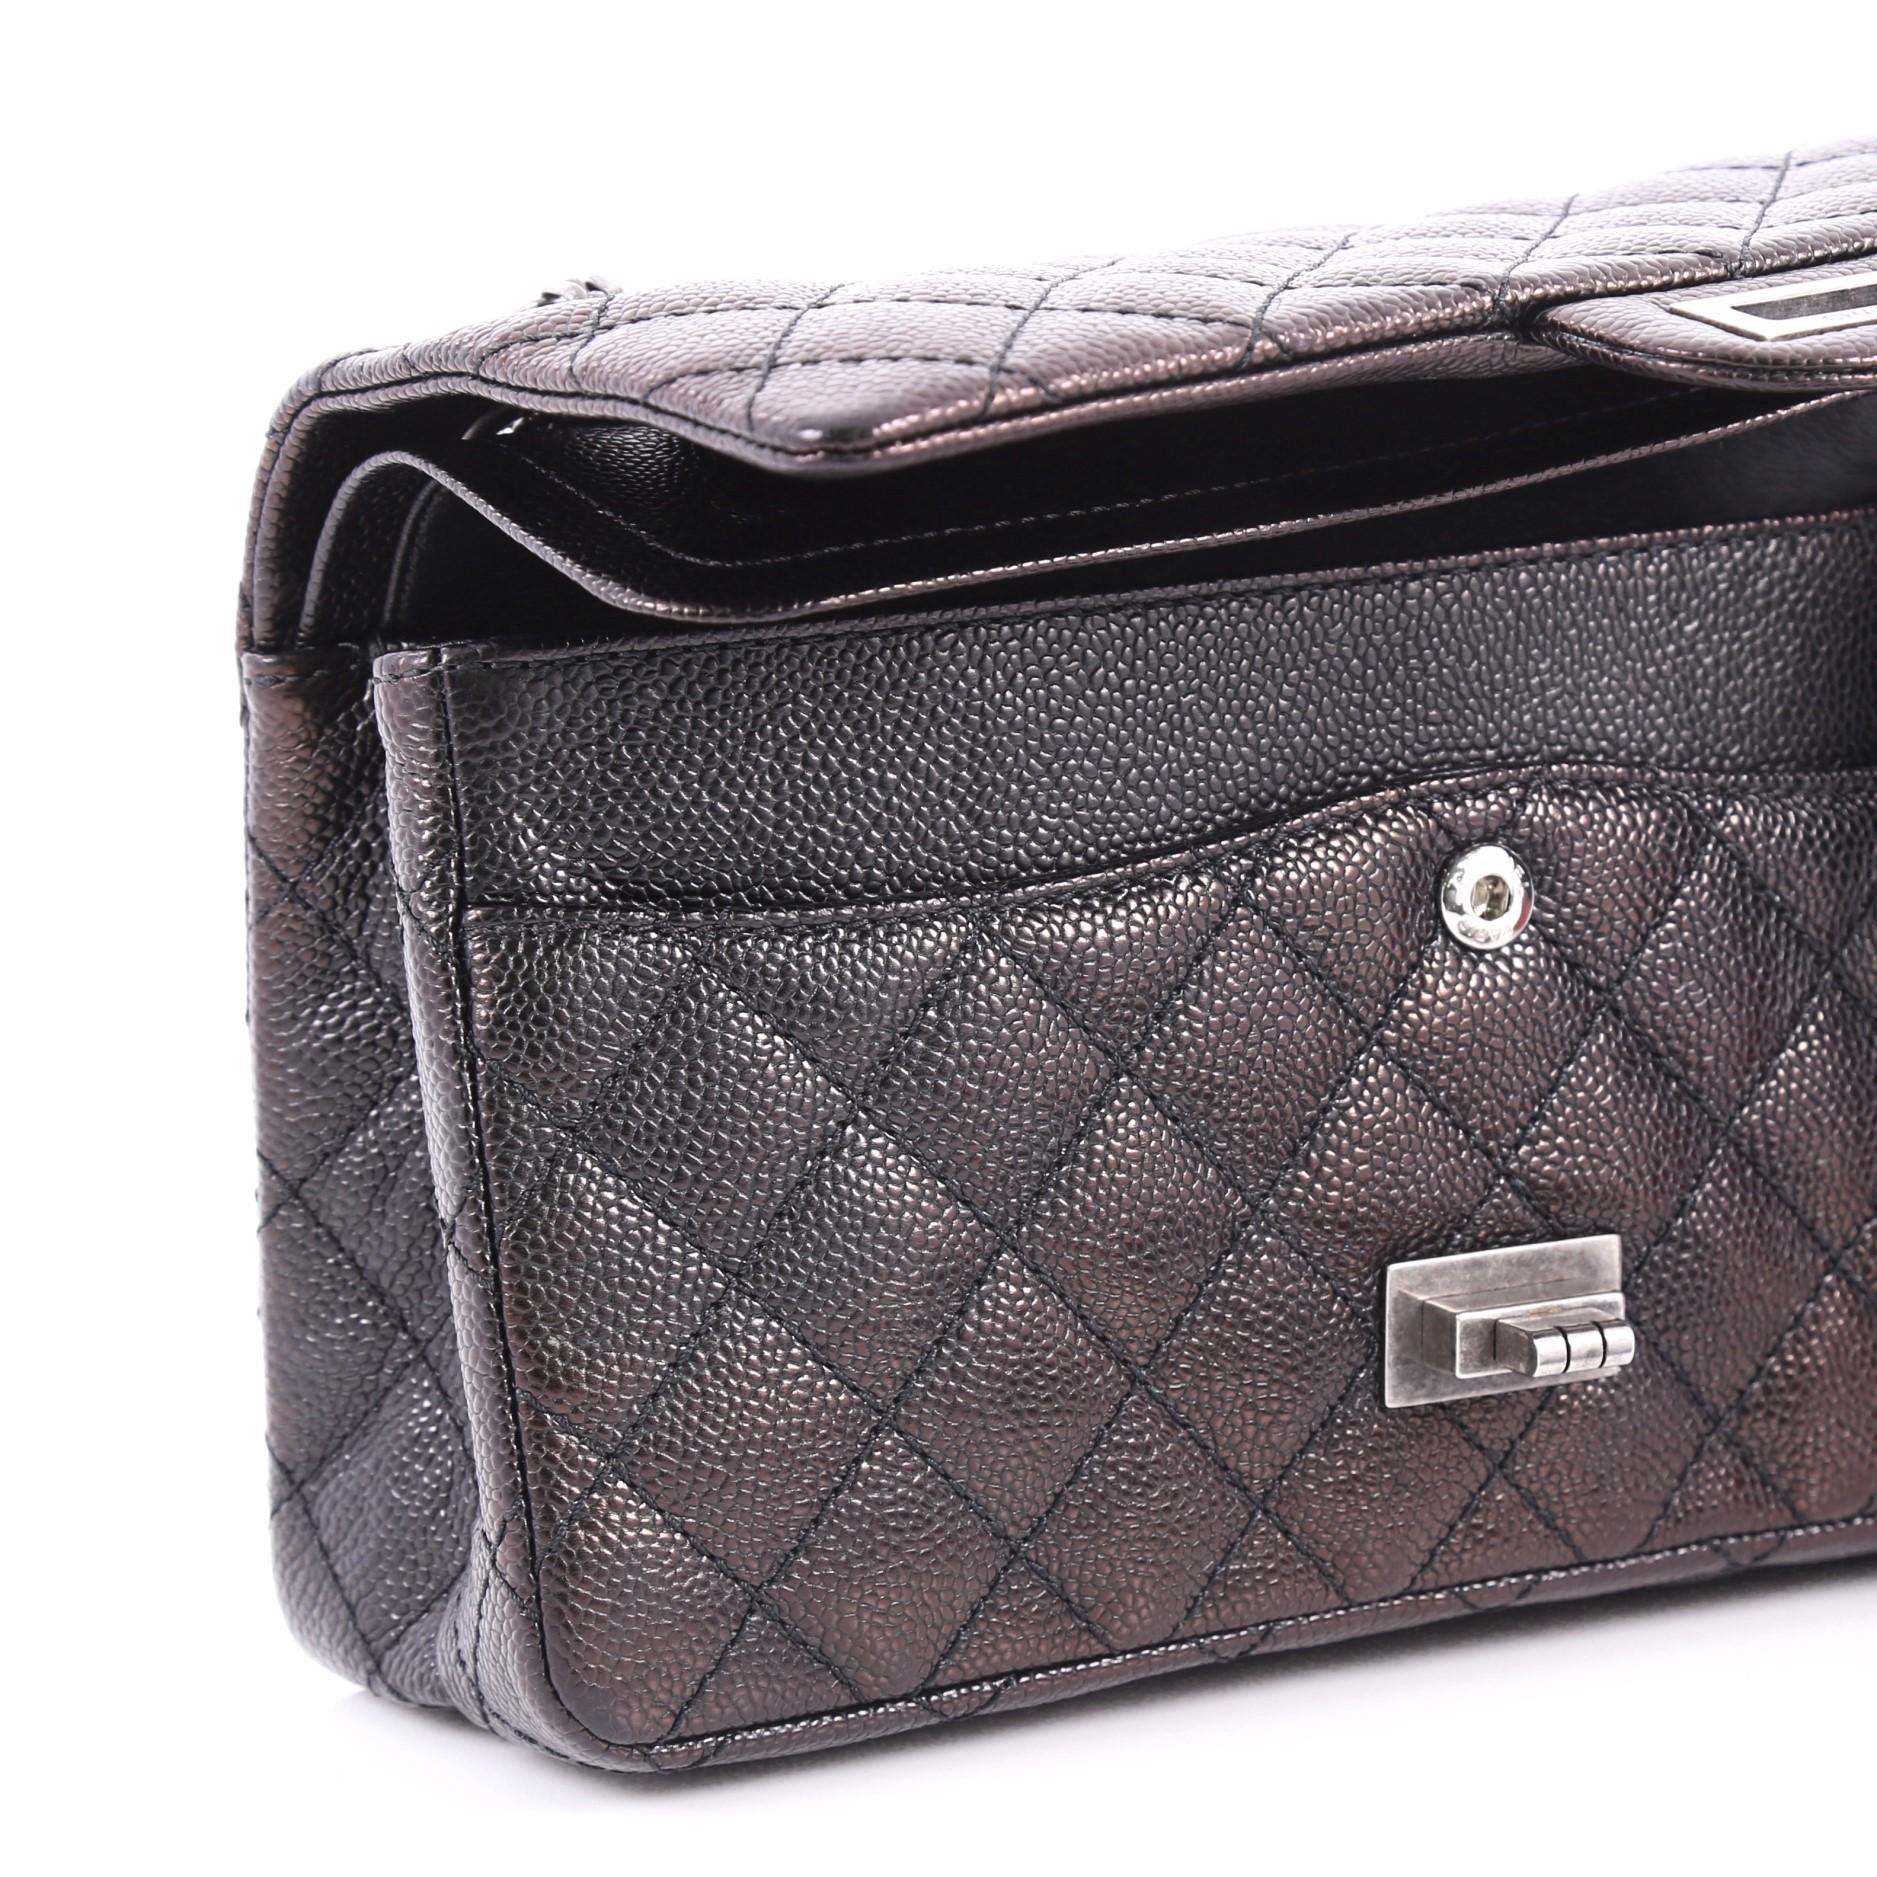 Chanel Reissue 2.55 Handbag Quilted Caviar 225 4